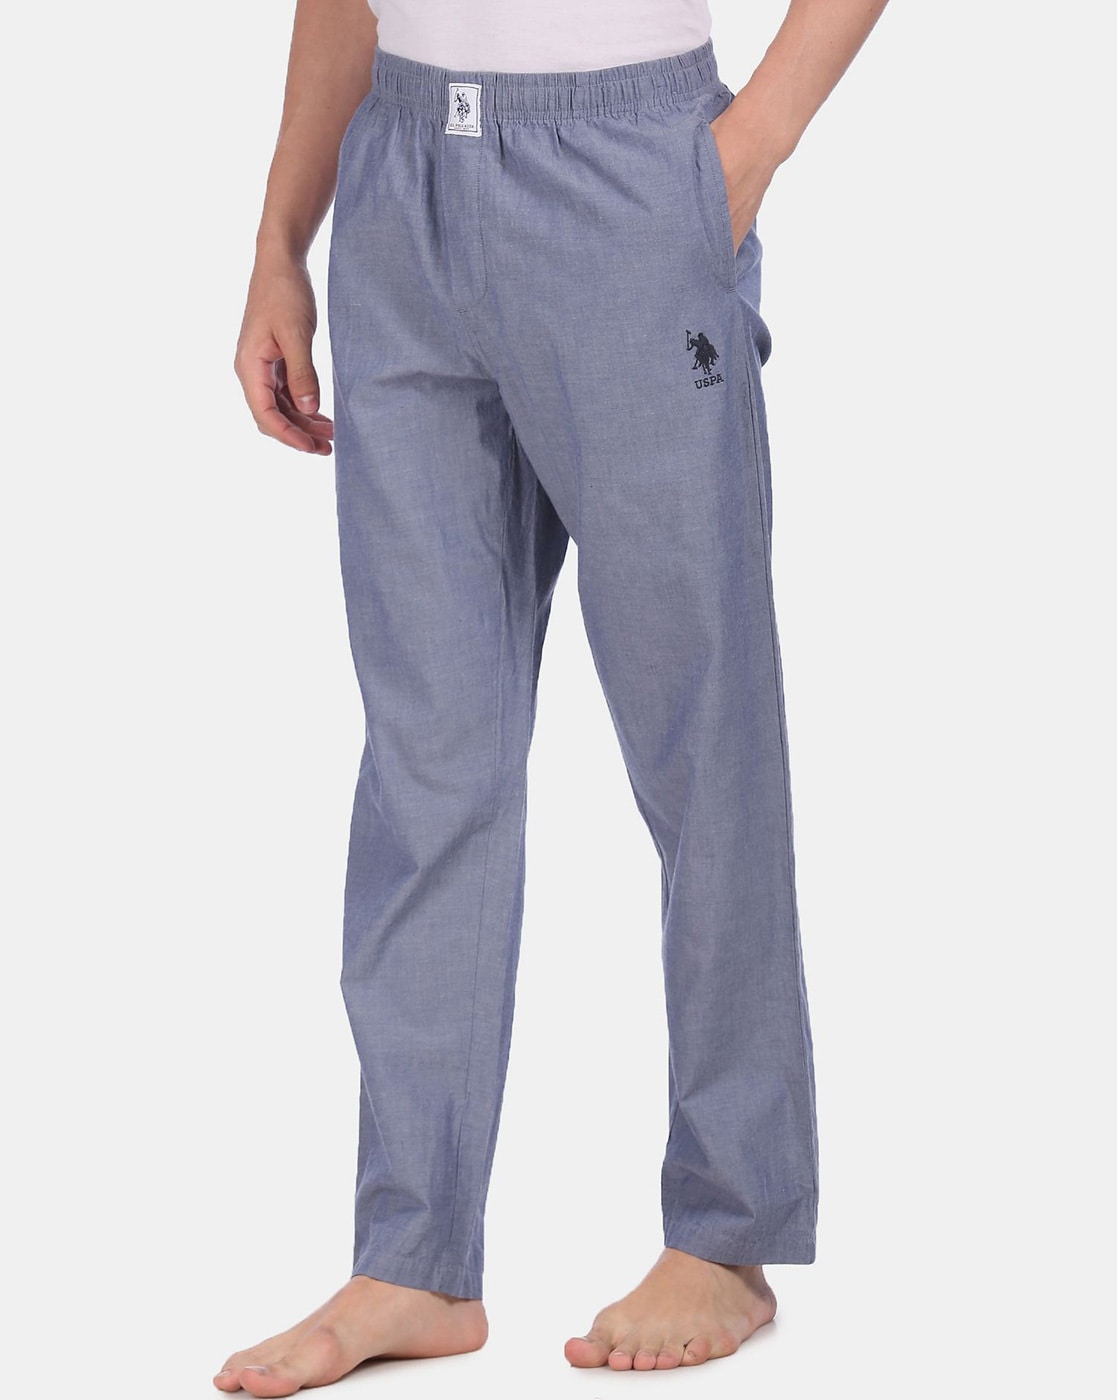 U.S. Polo Assn Men's Size XL Sleepwear Pants Plaid Blue And Gray | eBay